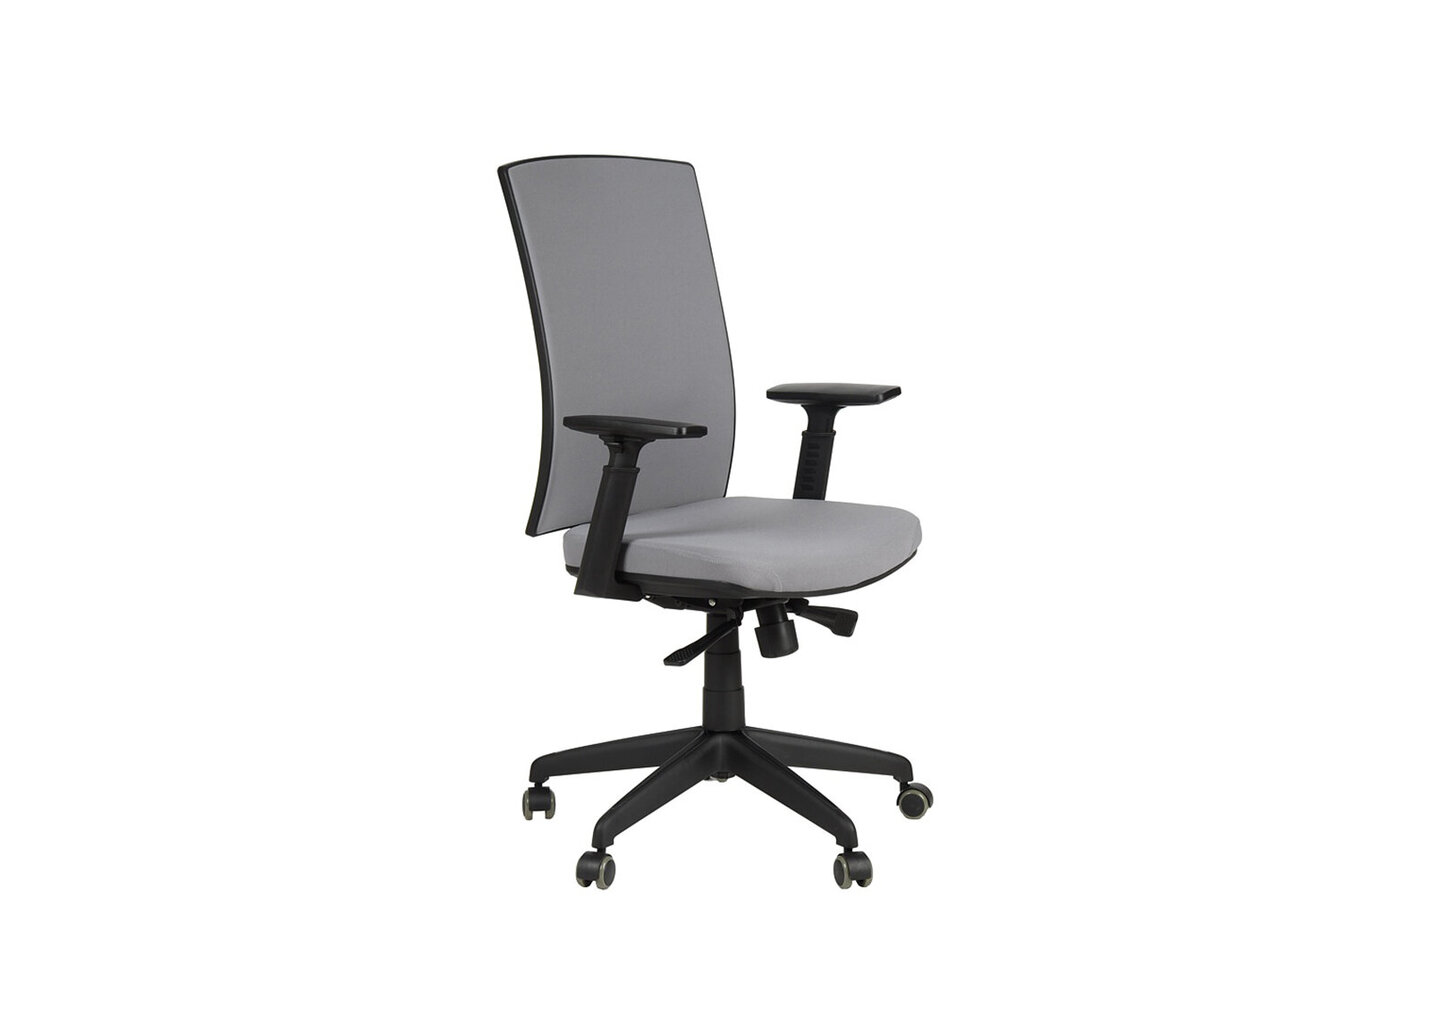 Biuro kėdė A2A KB-8922B, pilka kaina ir informacija | Biuro kėdės | pigu.lt